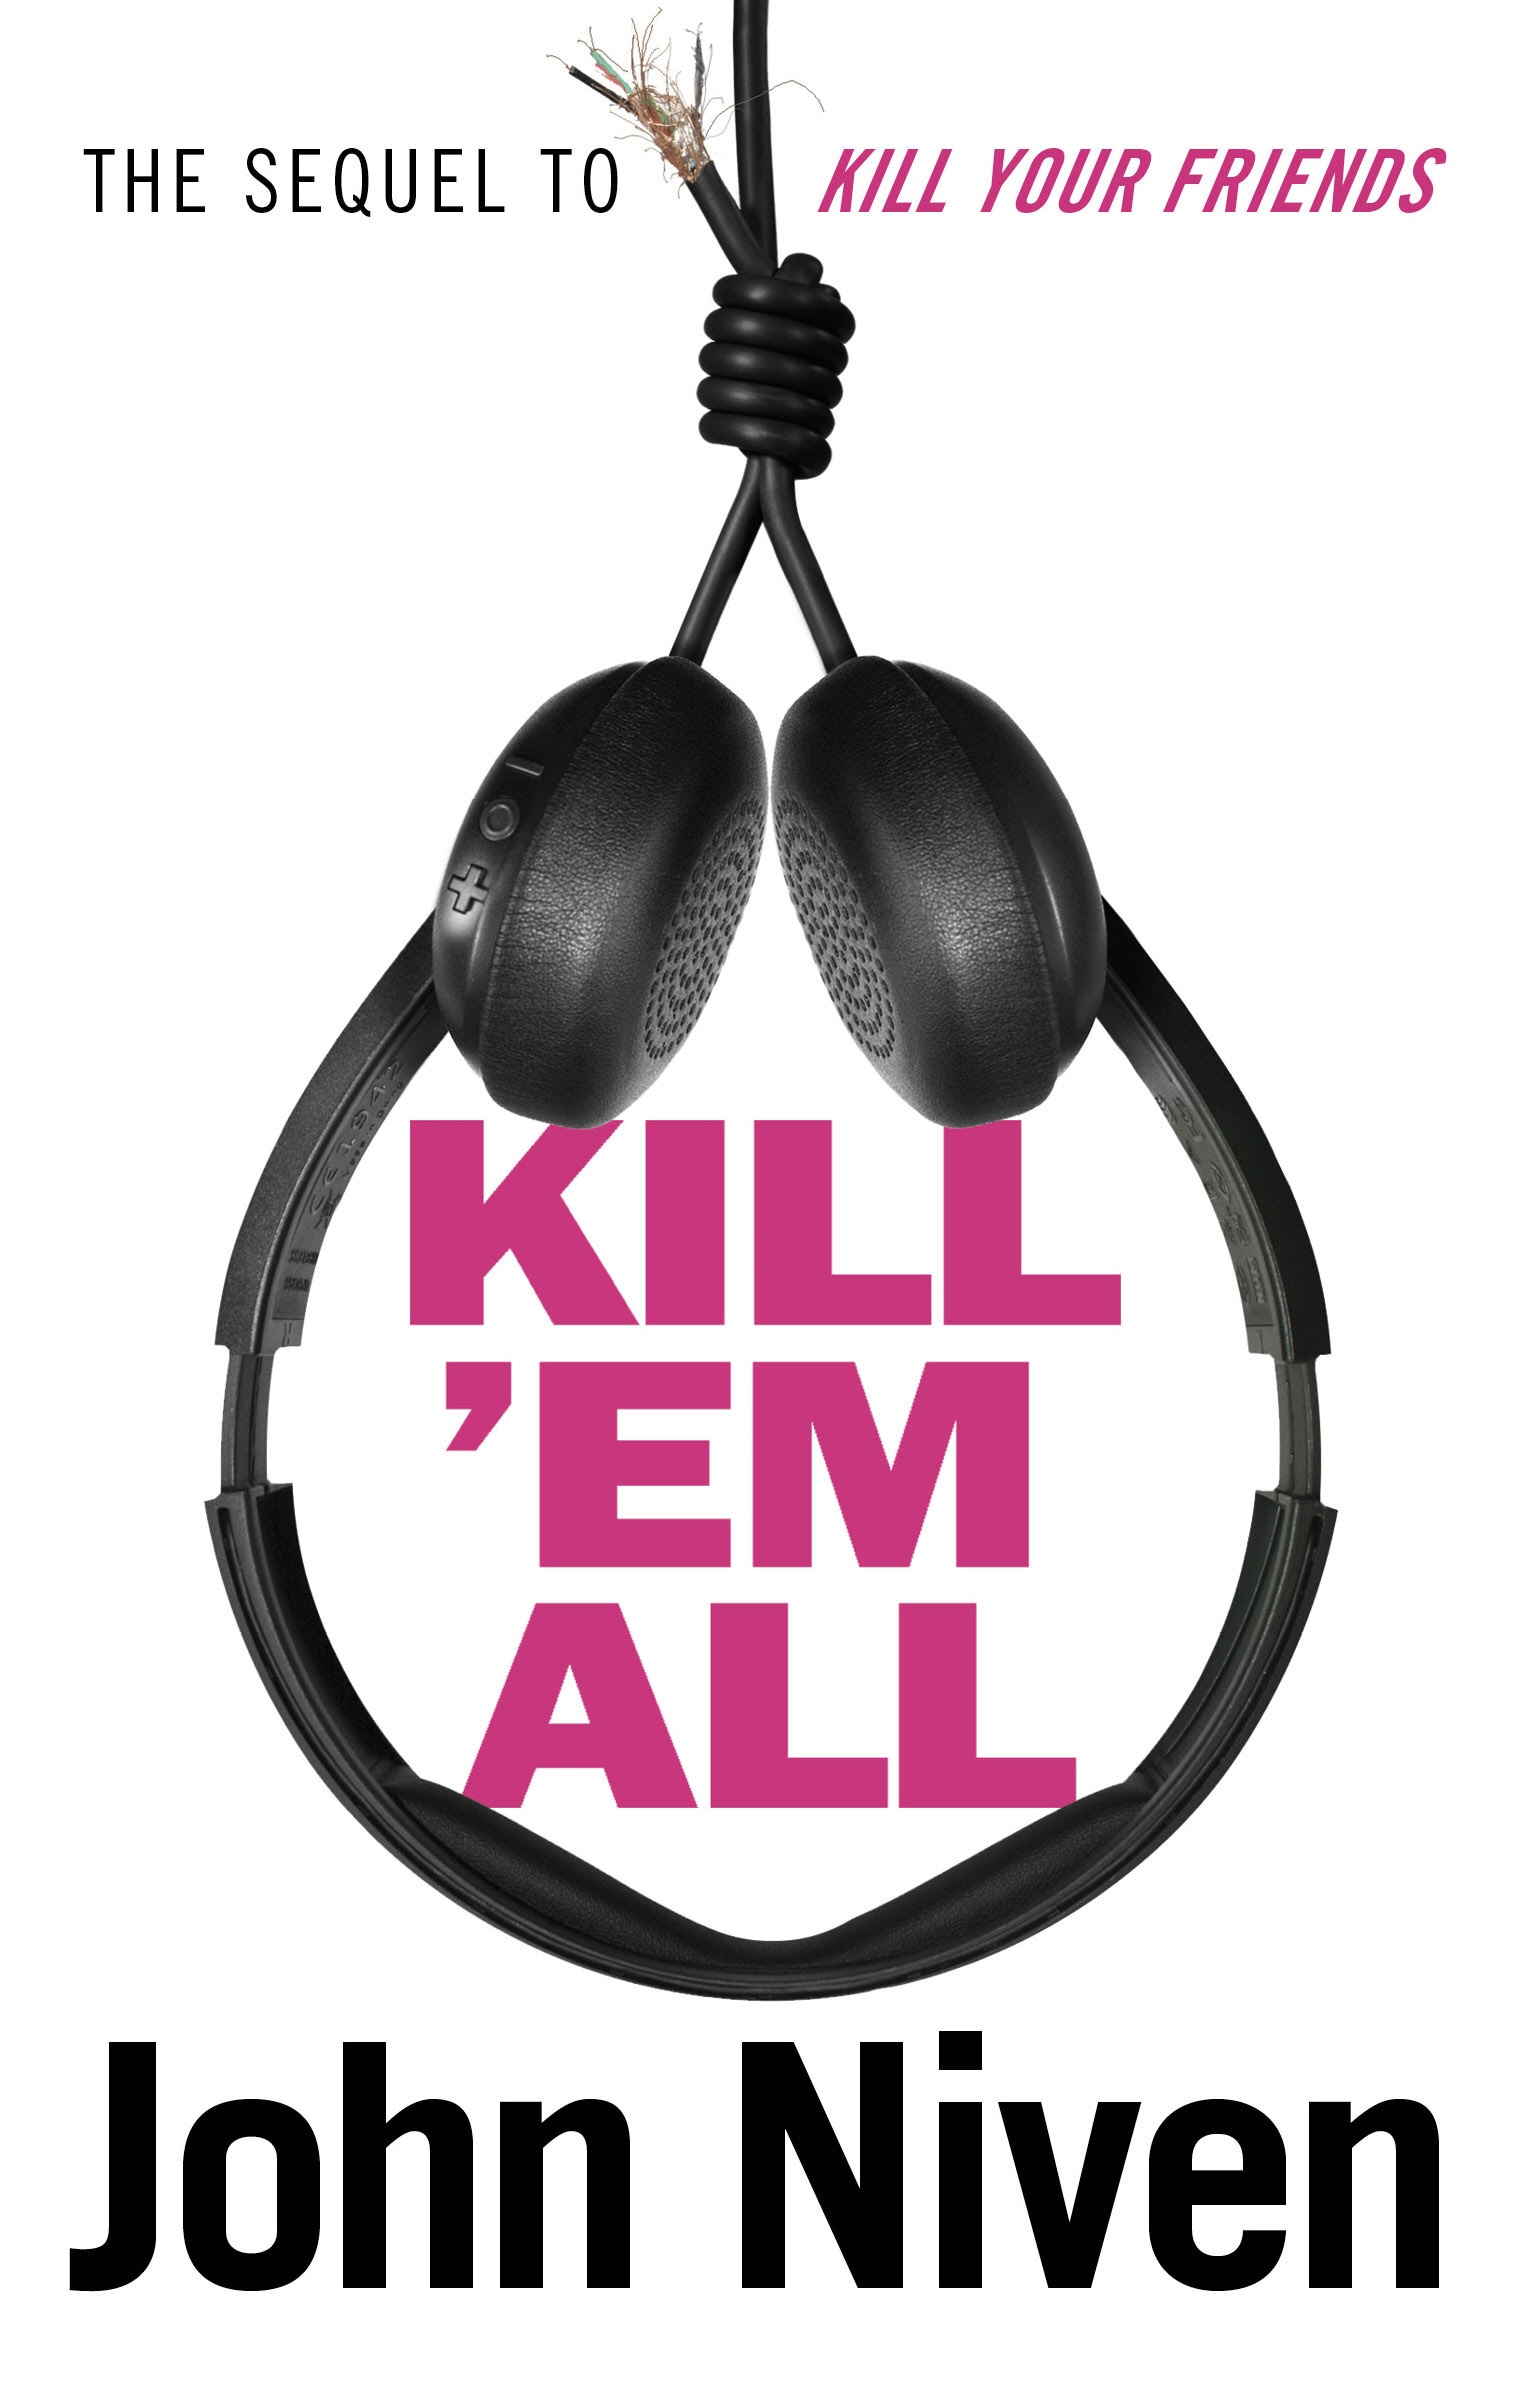 Book “Kill ’Em All” by John Niven — June 6, 2019